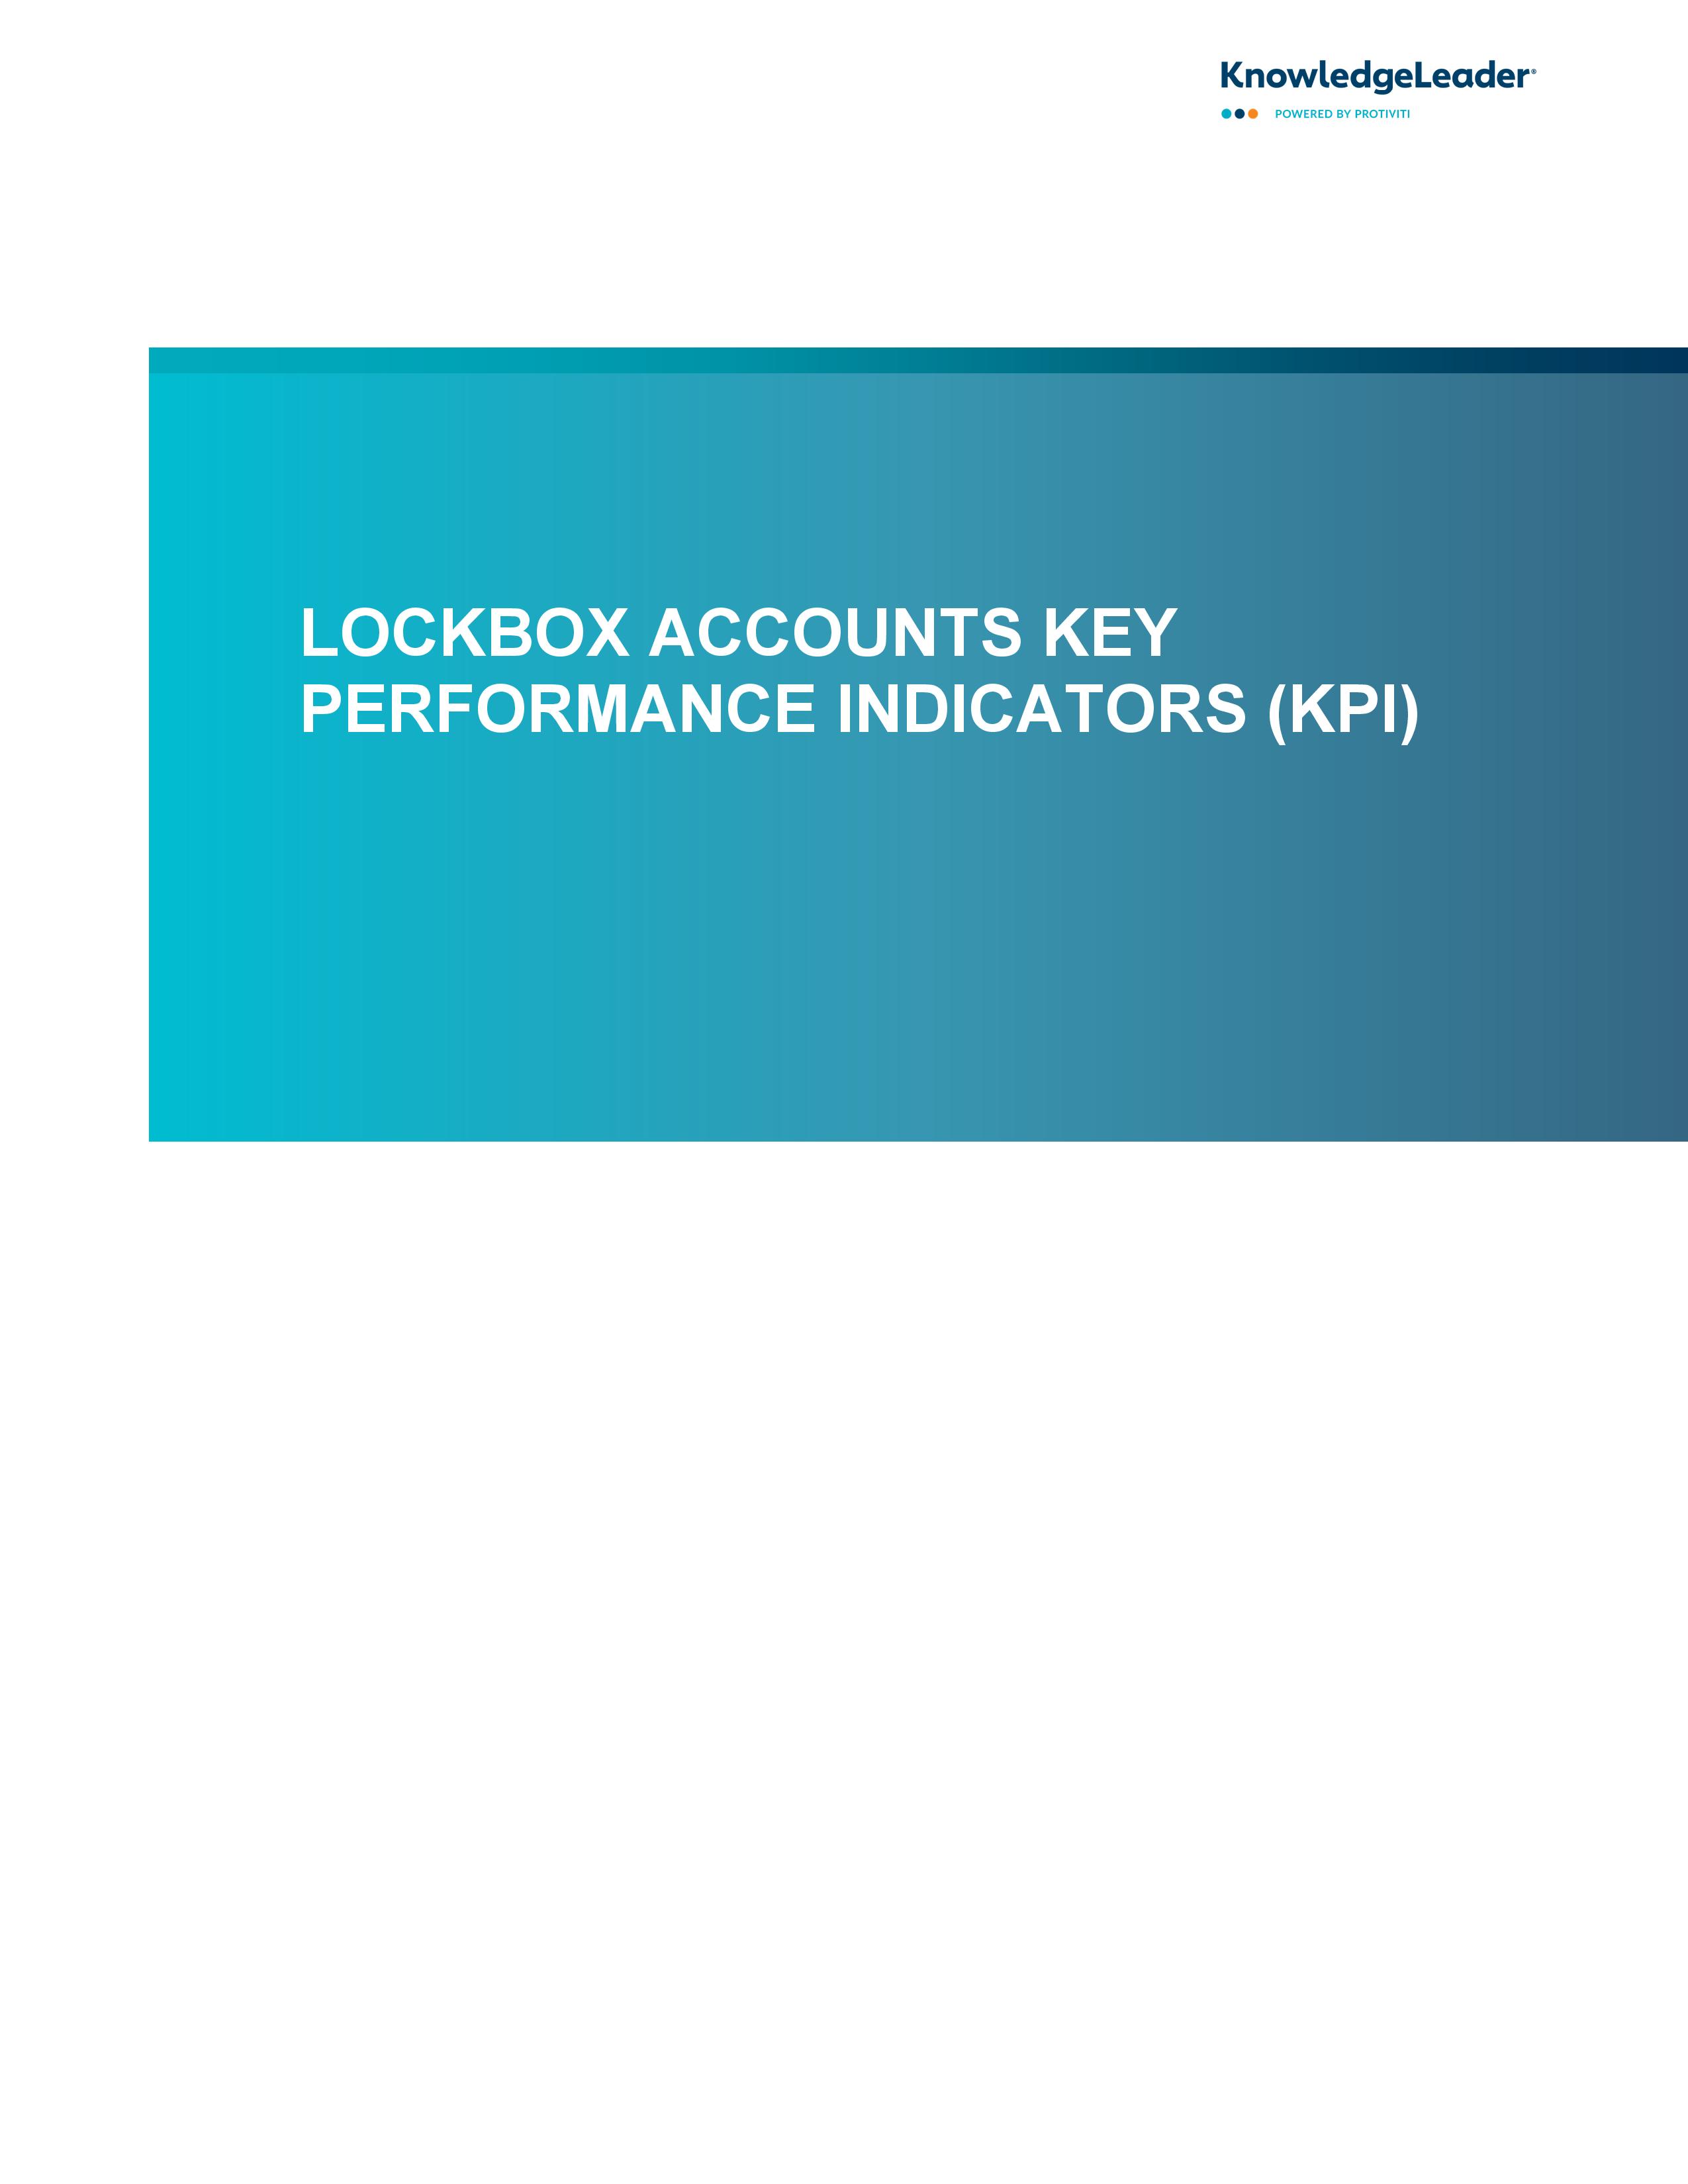 Screenshot of the first page of Lockbox Accounts Key Performance Indicators